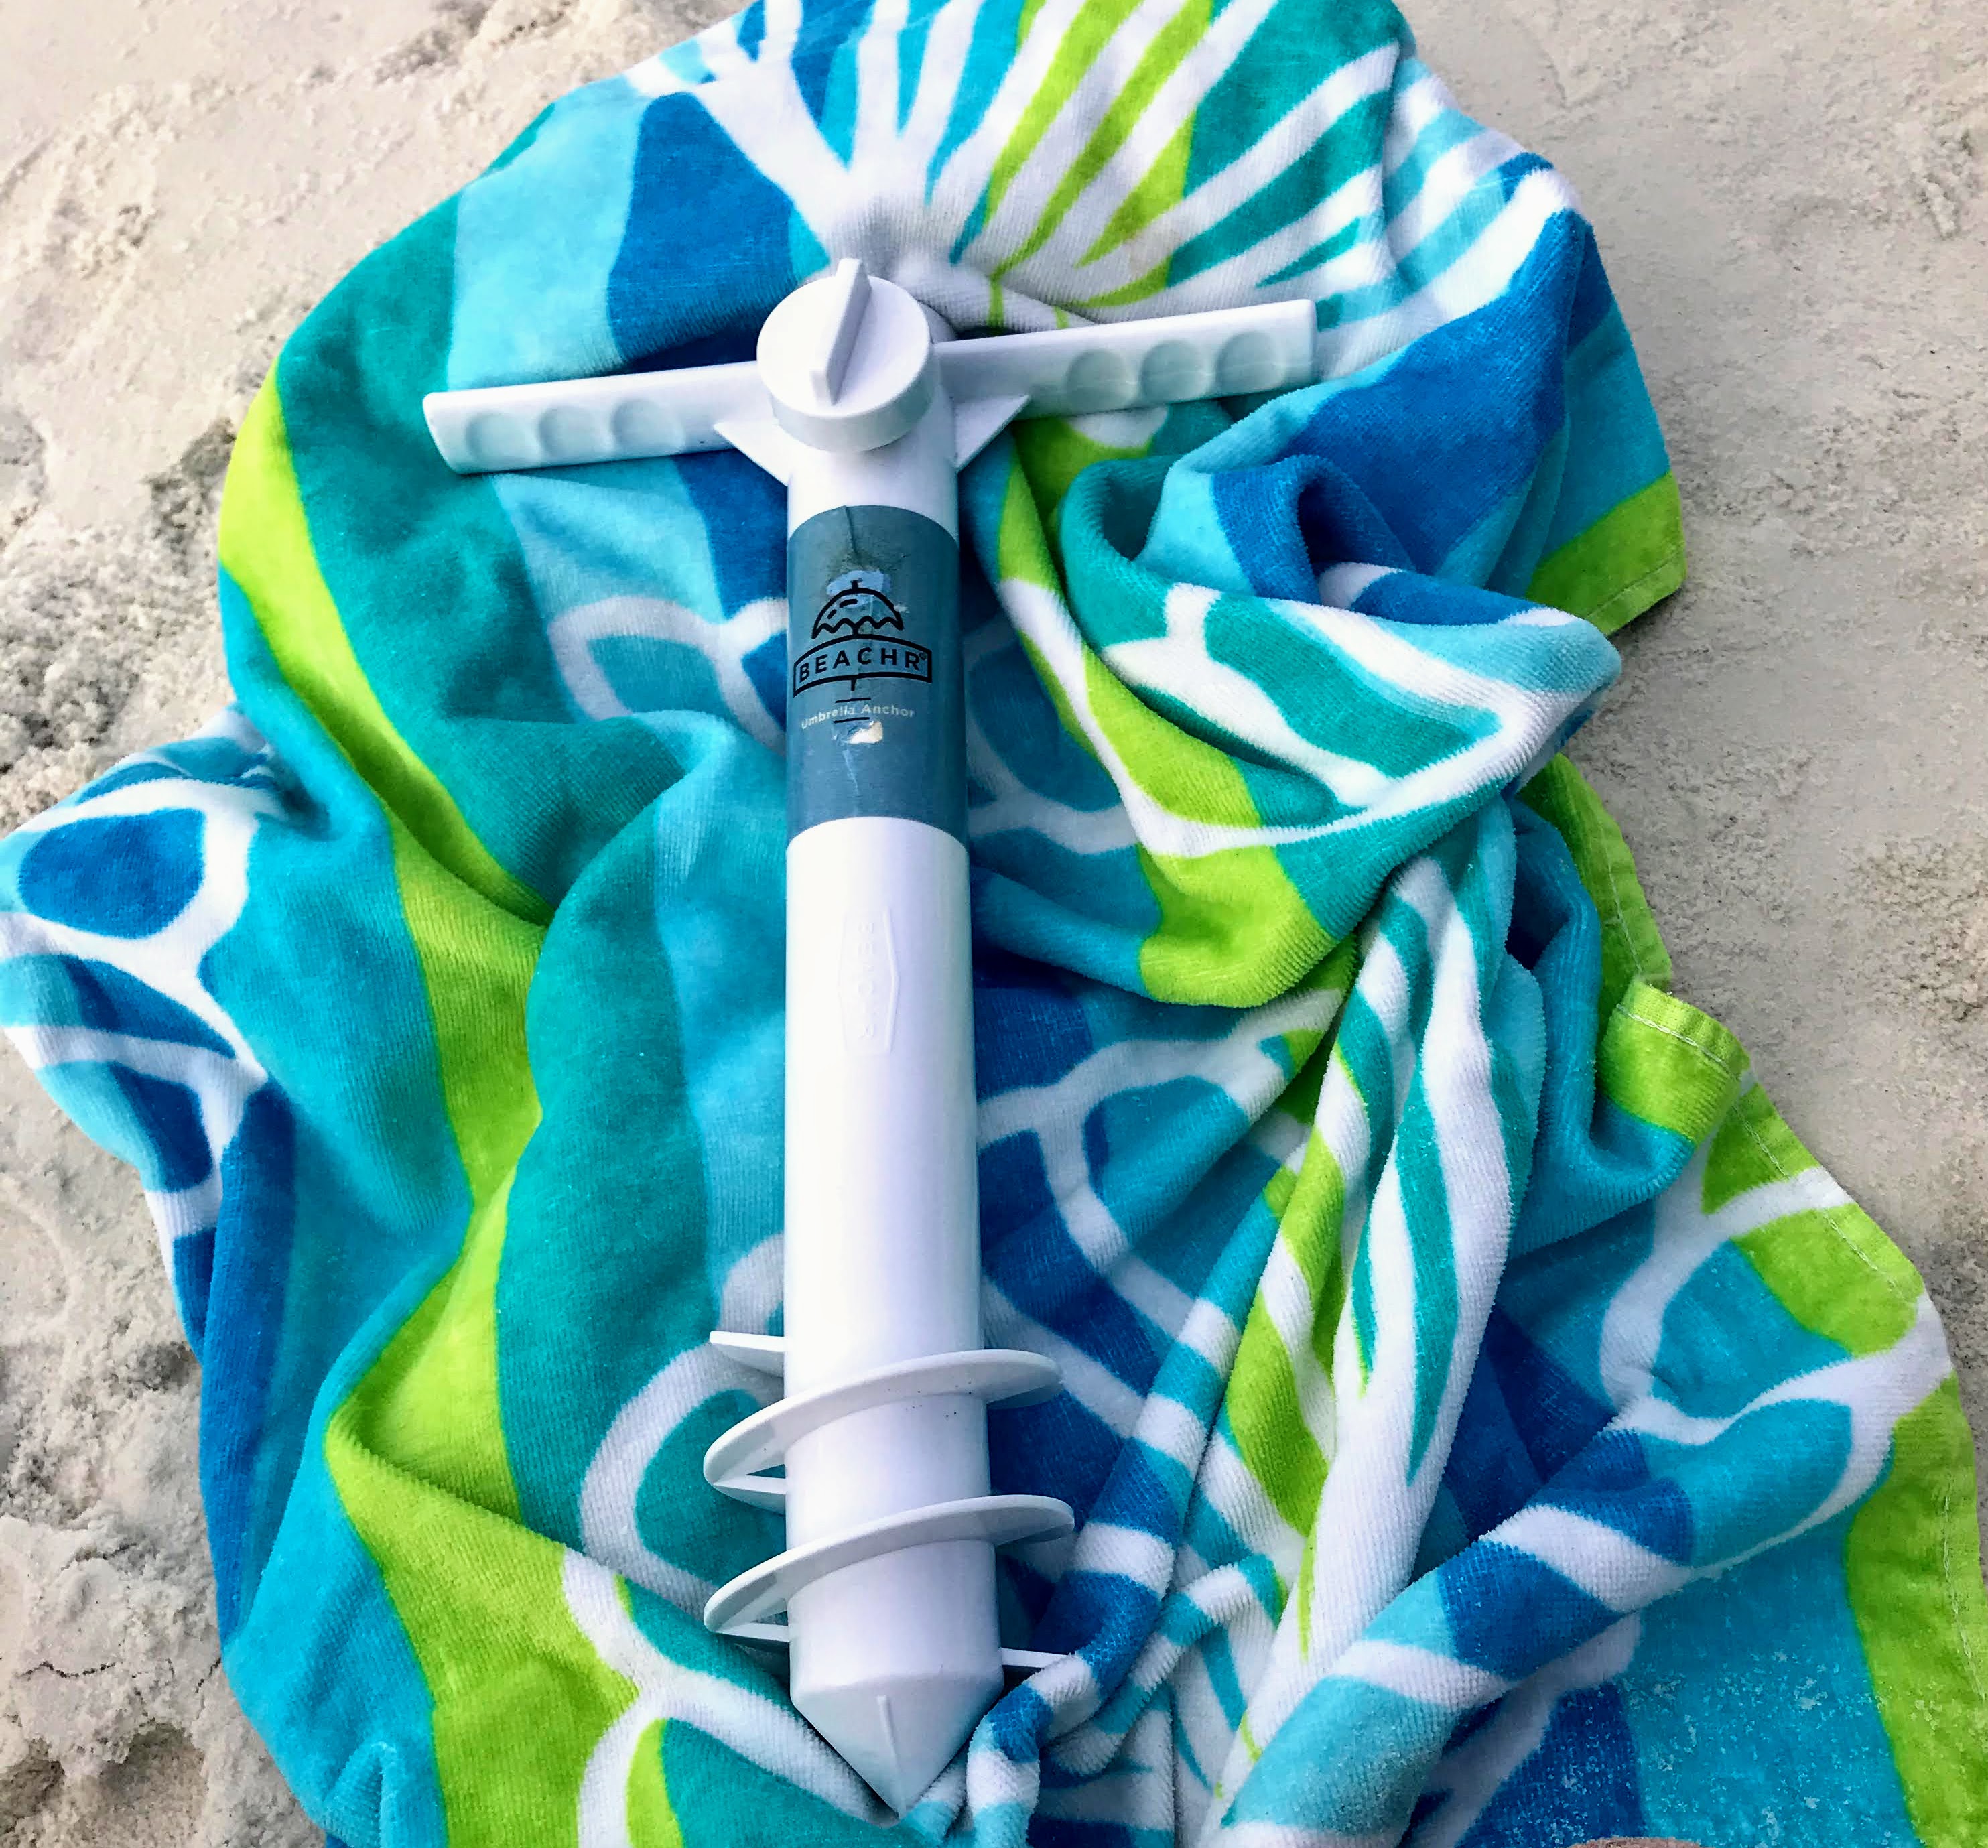 beach umbrella sand anchor